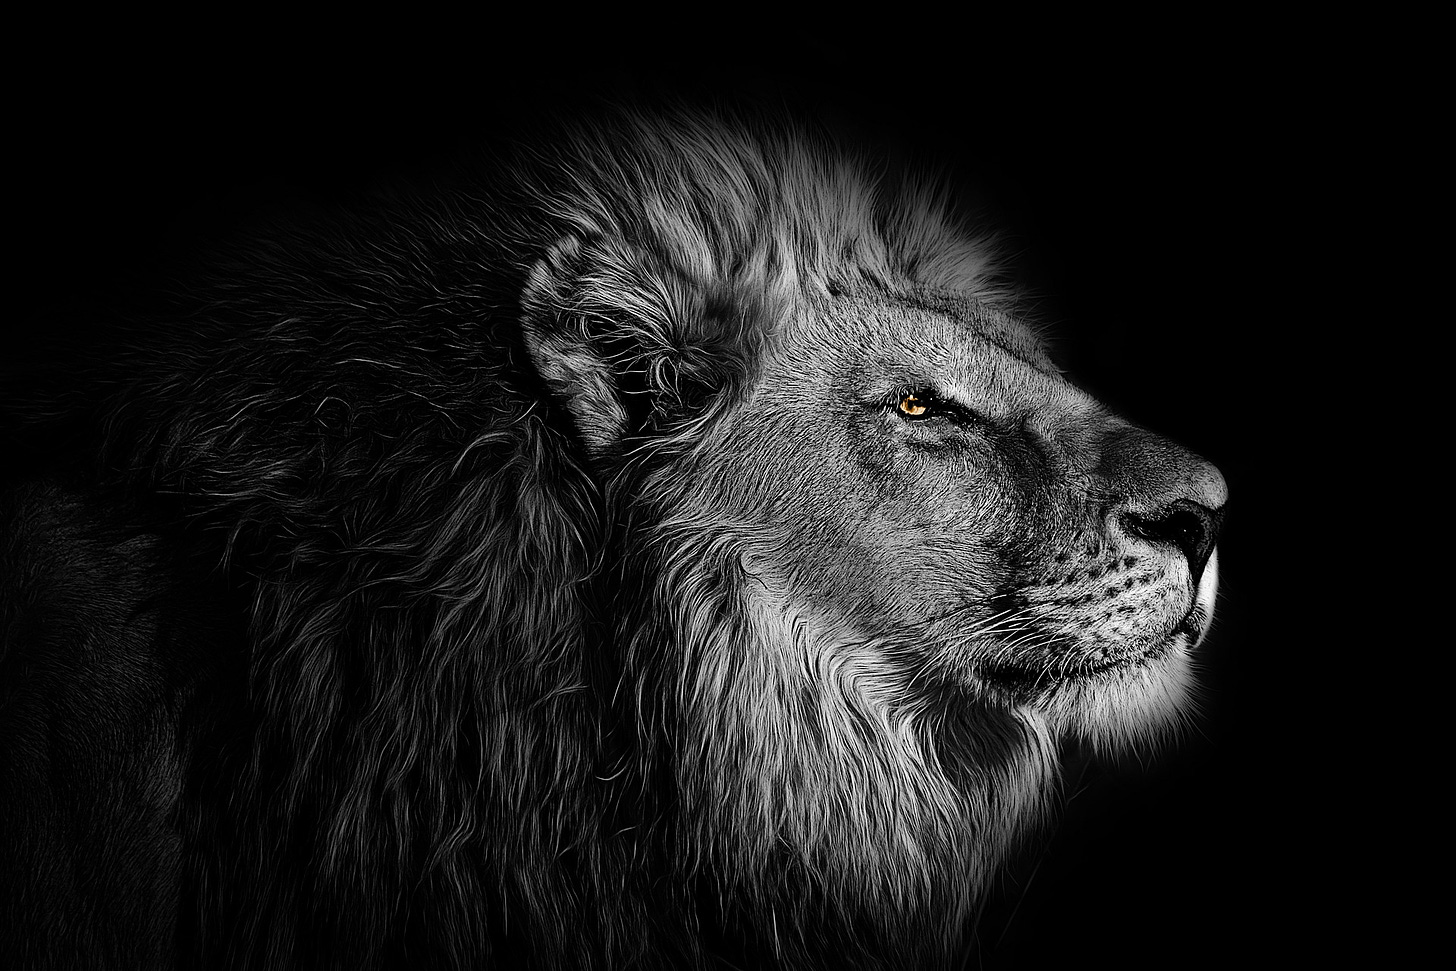 Image of lion